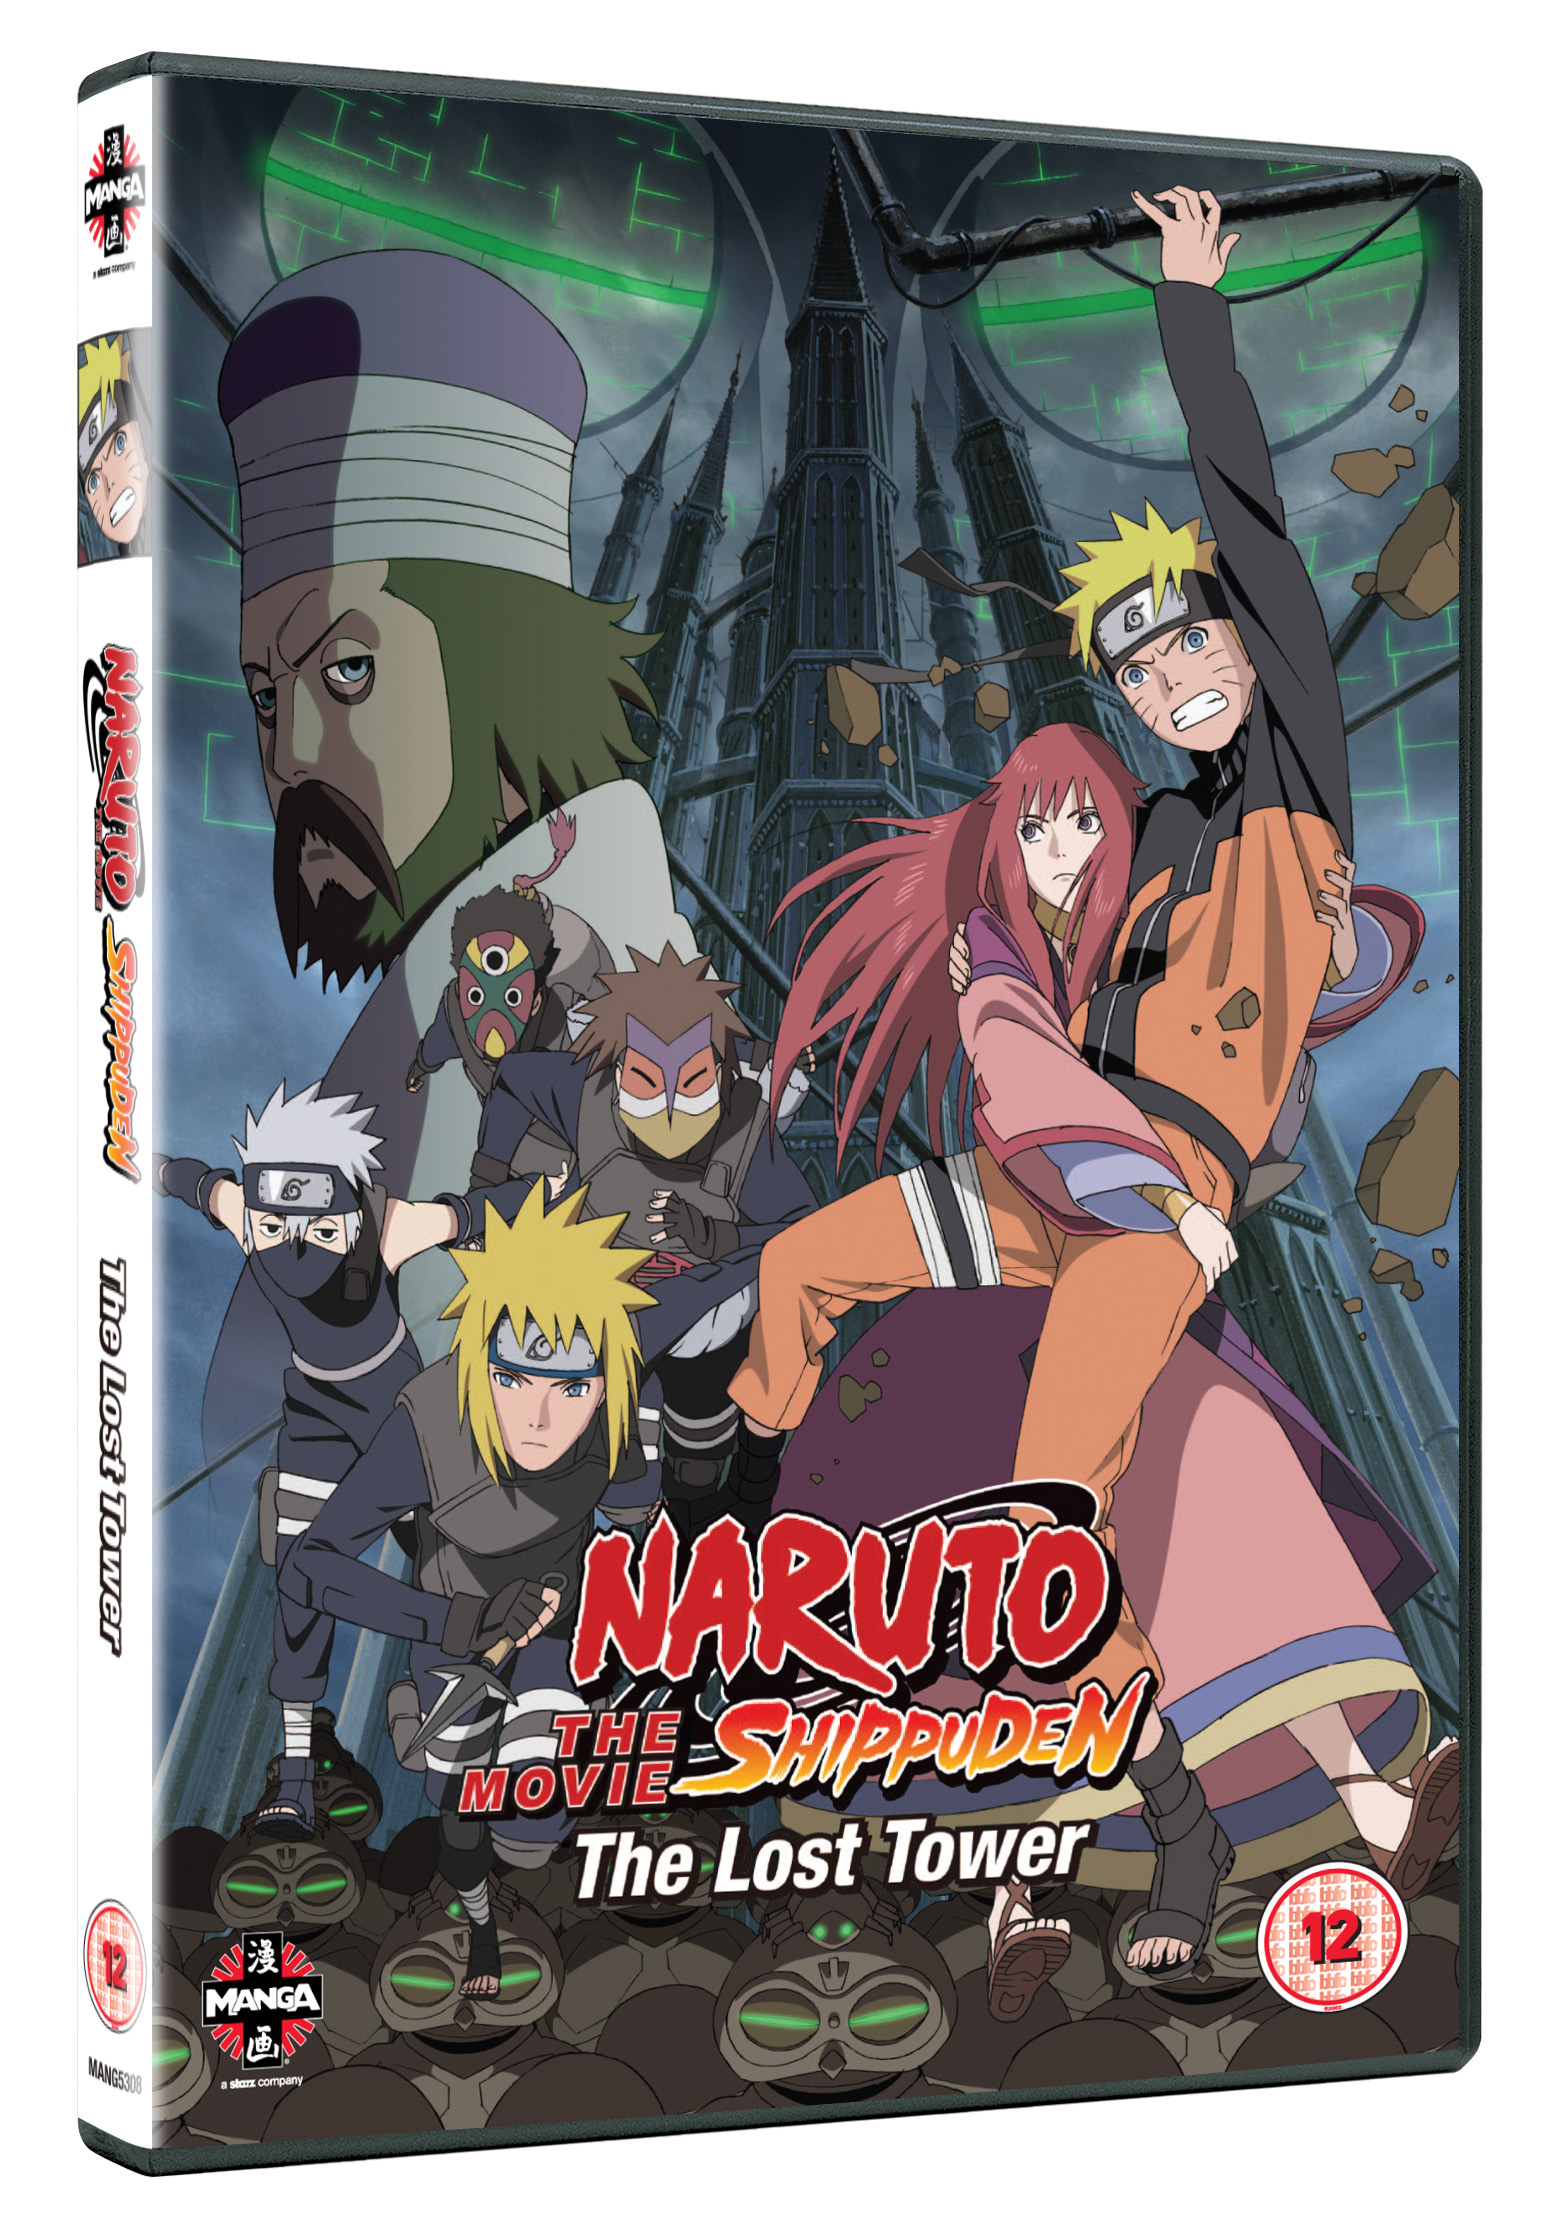 naruto shippuden movie 4 the lost tower summary